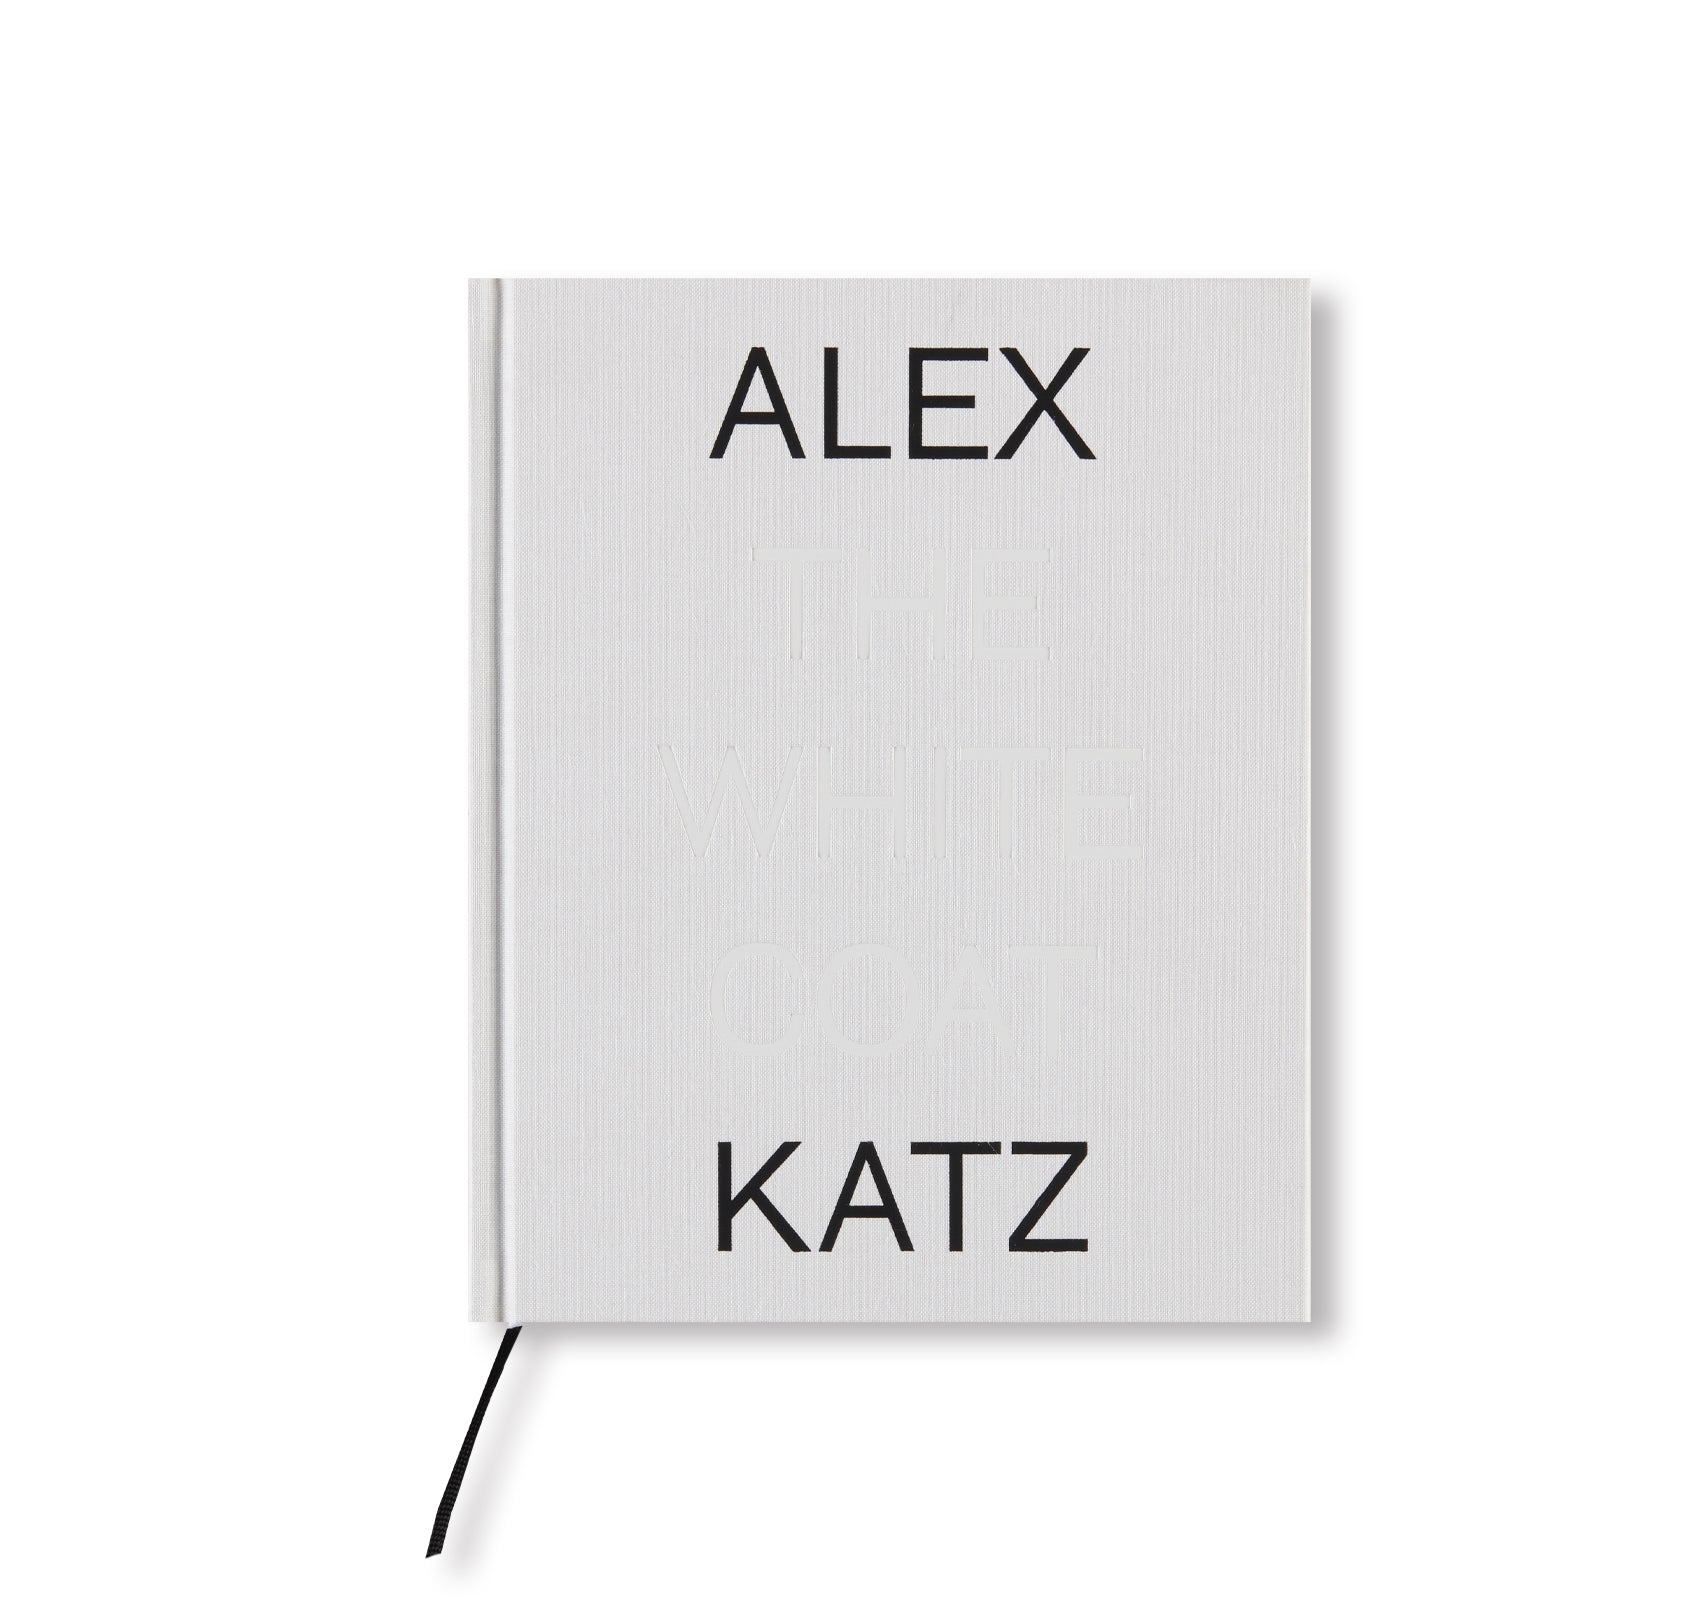 THE WHITE COAT by Alex Katz